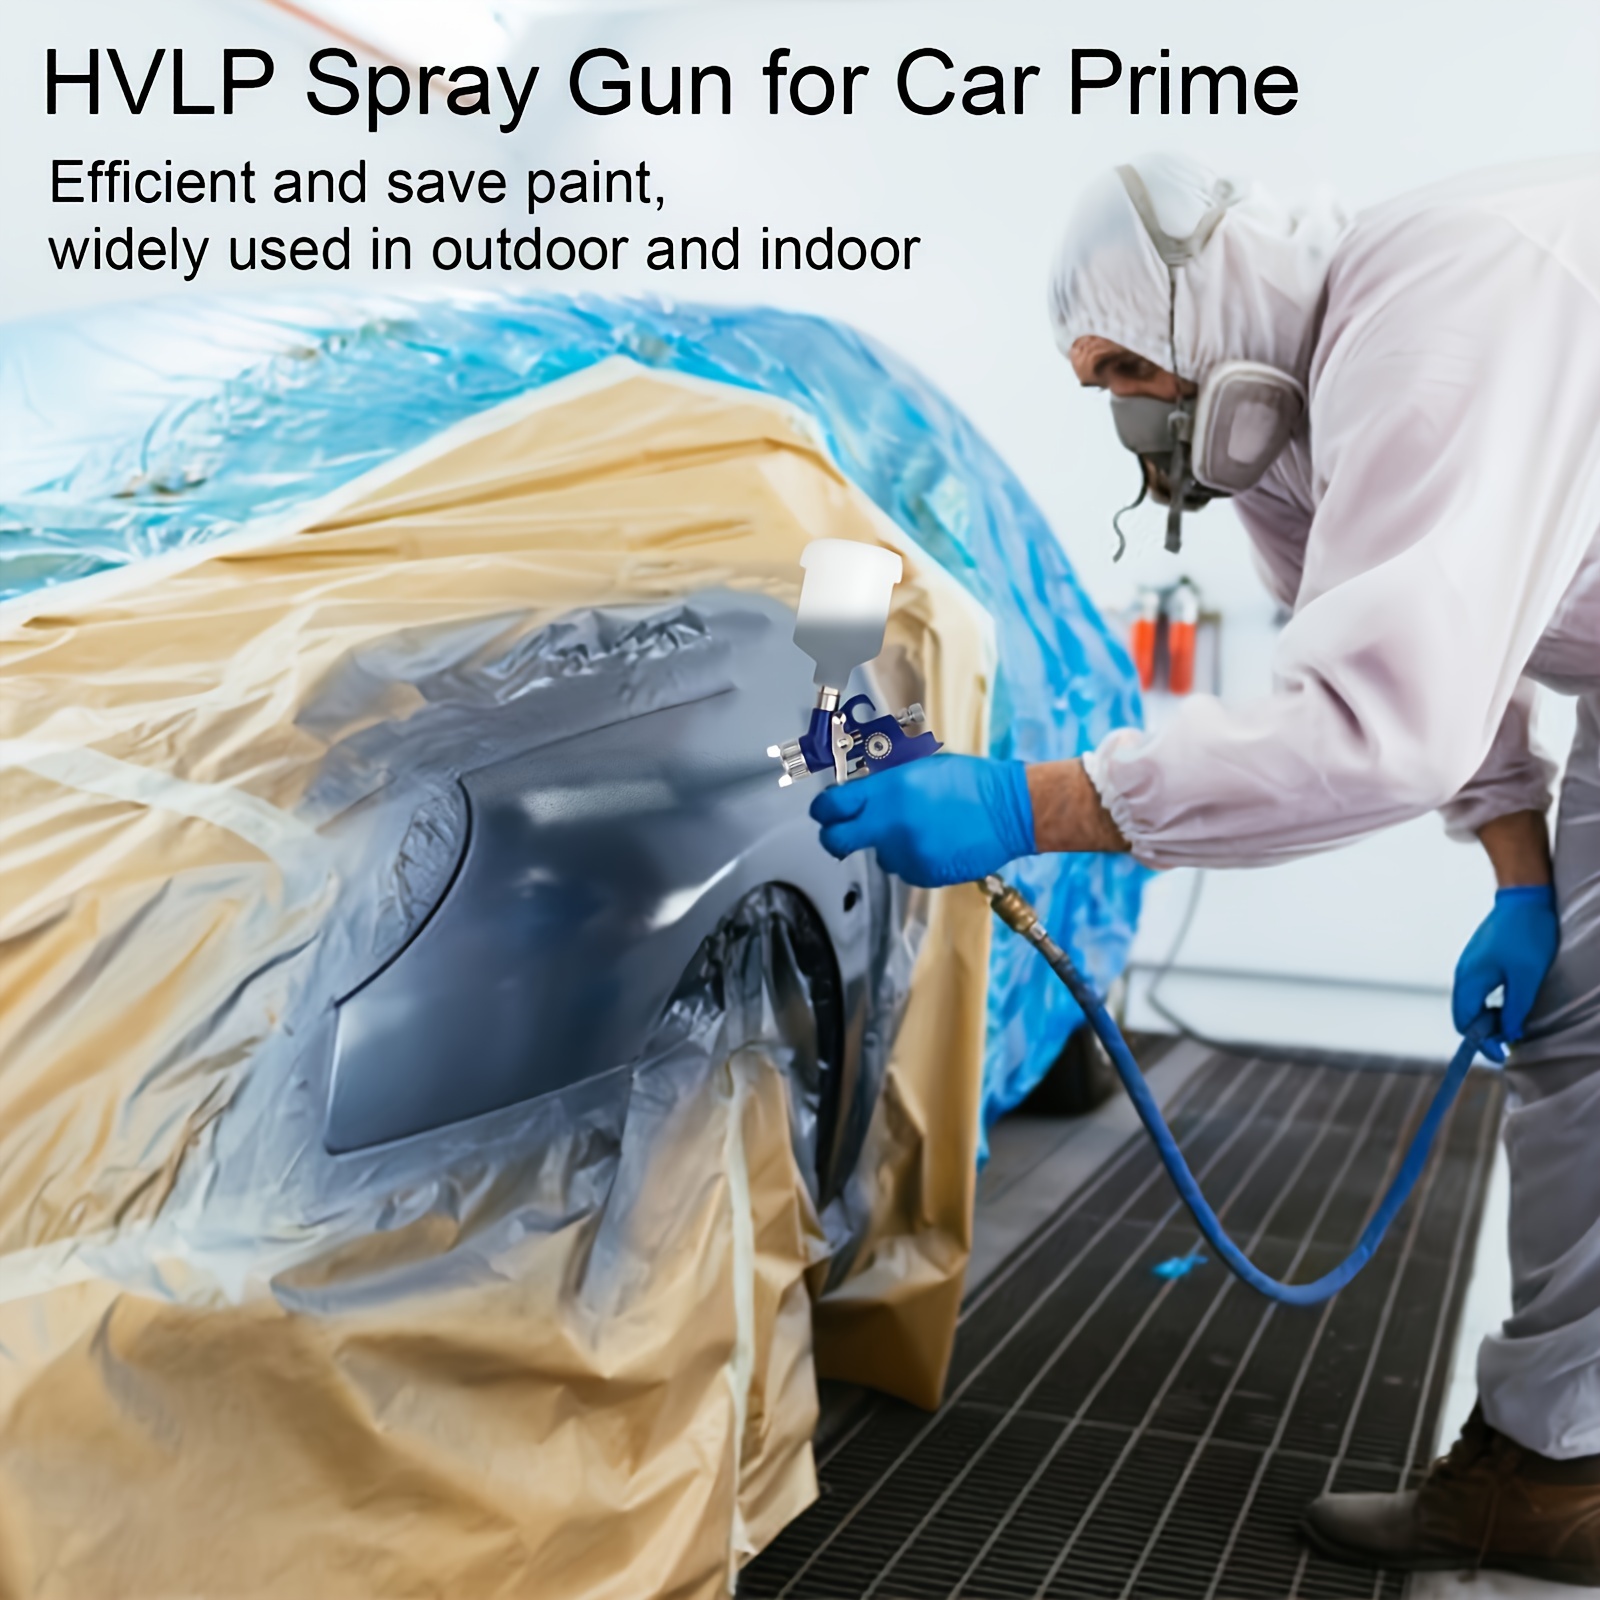 

1 Set Hvlp Spray Gun, With 1.0mm Tip Air Spray Gun, For Car Spray, For Car Primer, Furniture Surface Spray, Gravity Feed Spray Gun For Wall Spray, 125ml Capacity Cup Included